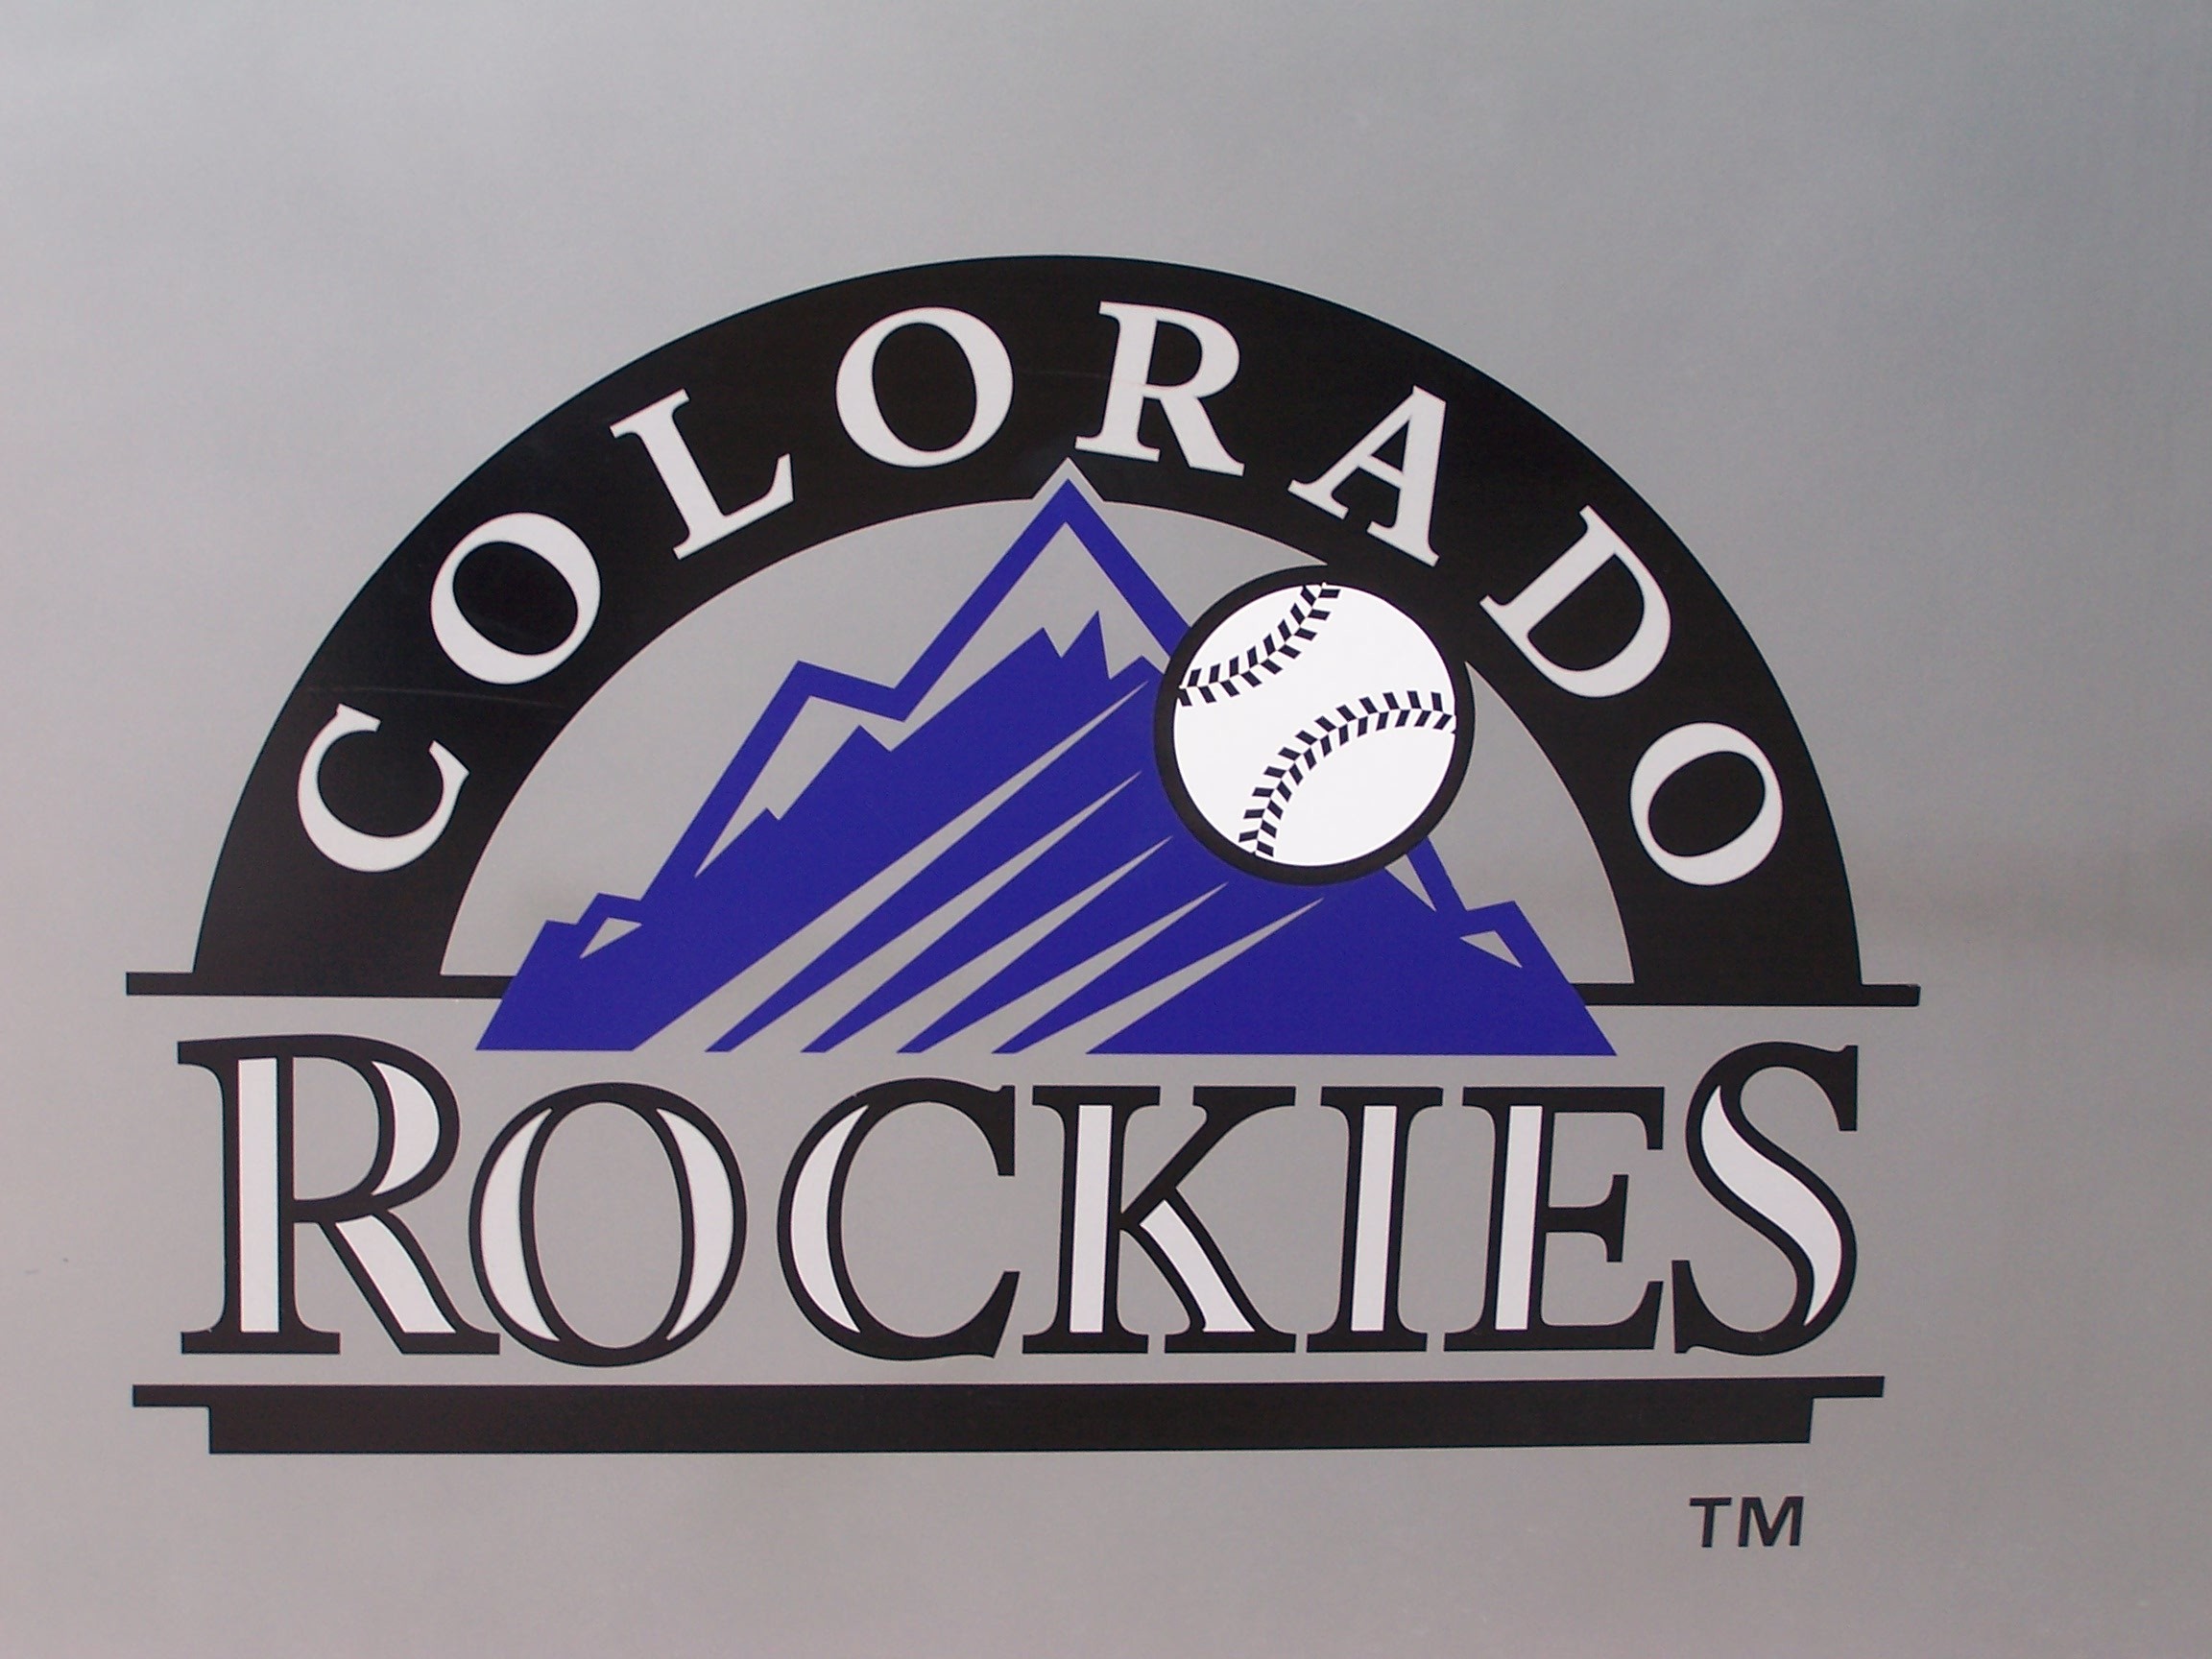 COLORADO ROCKIES baseball mlb (14) wallpaper, 1920x1200, 227943